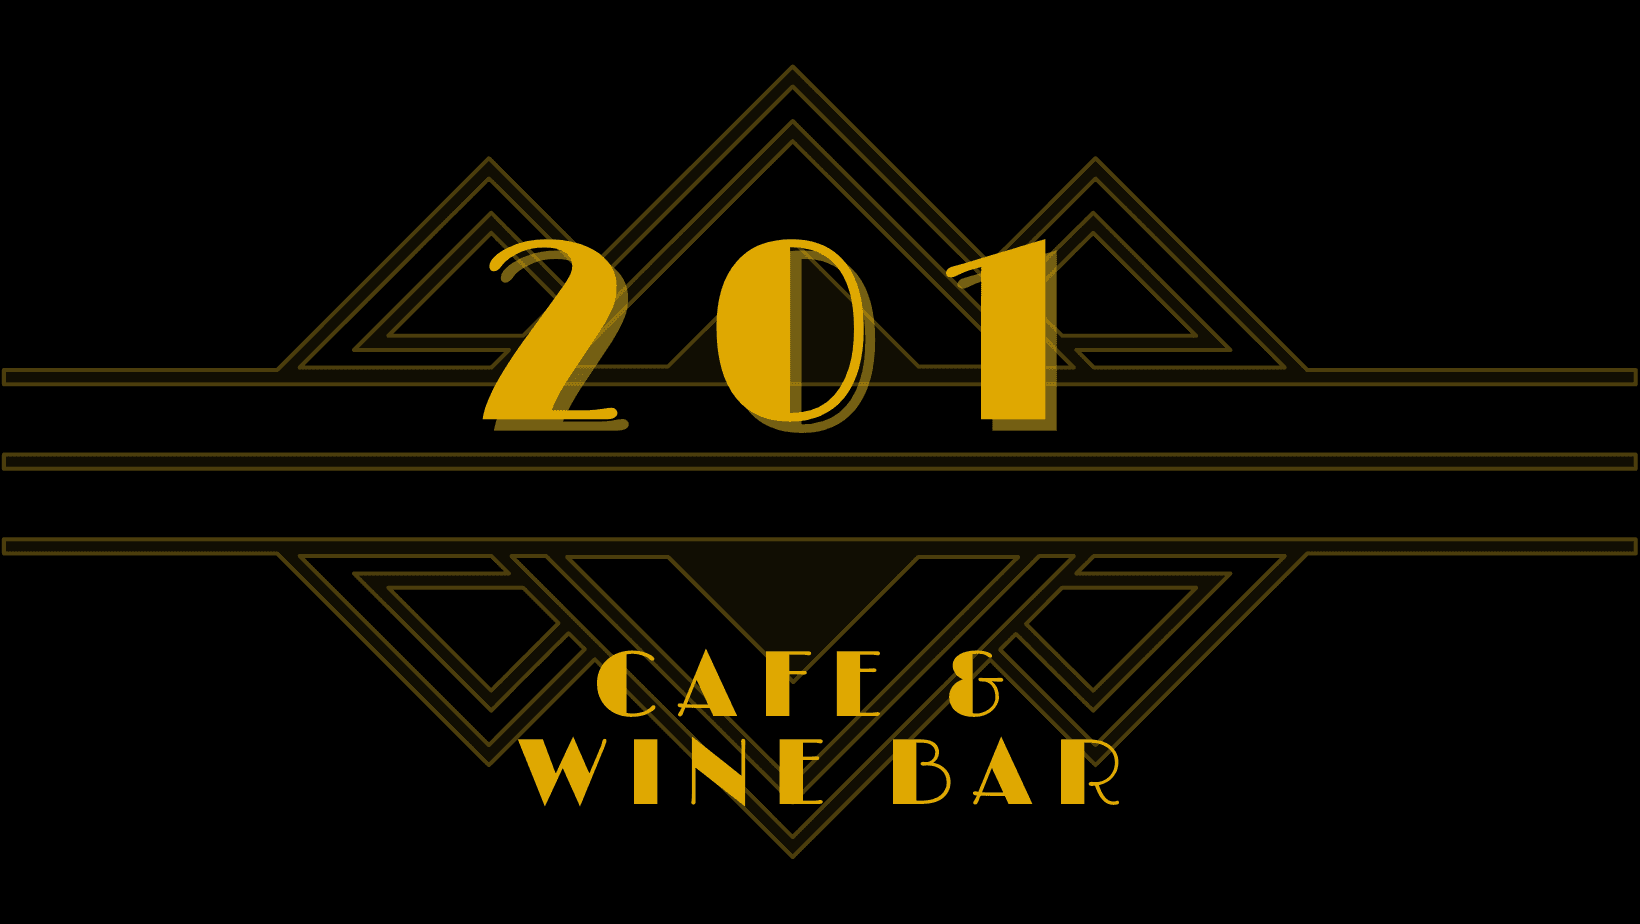 201 Cafe & Wine Bar